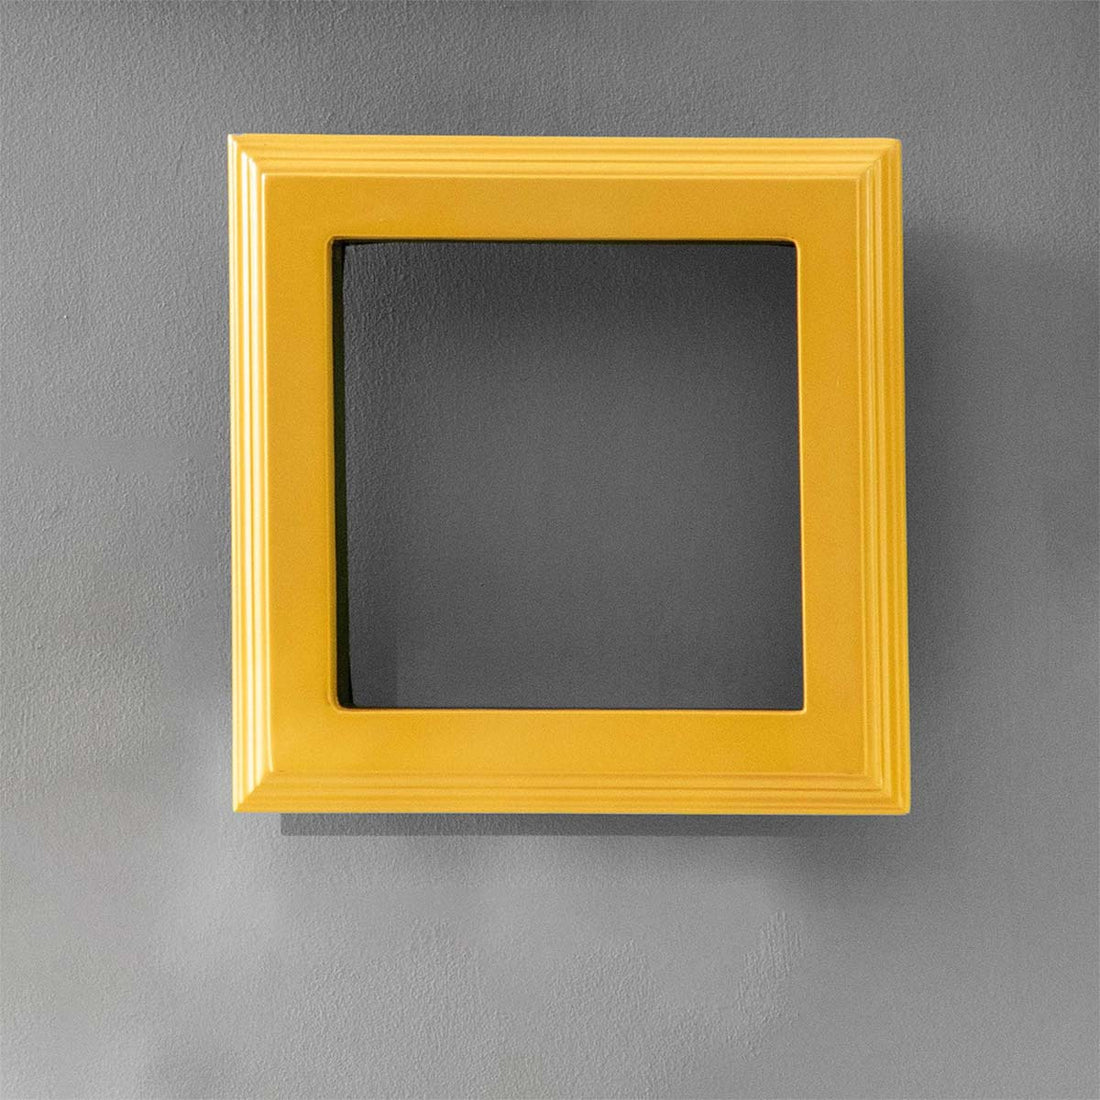 French Shelf yellow Square